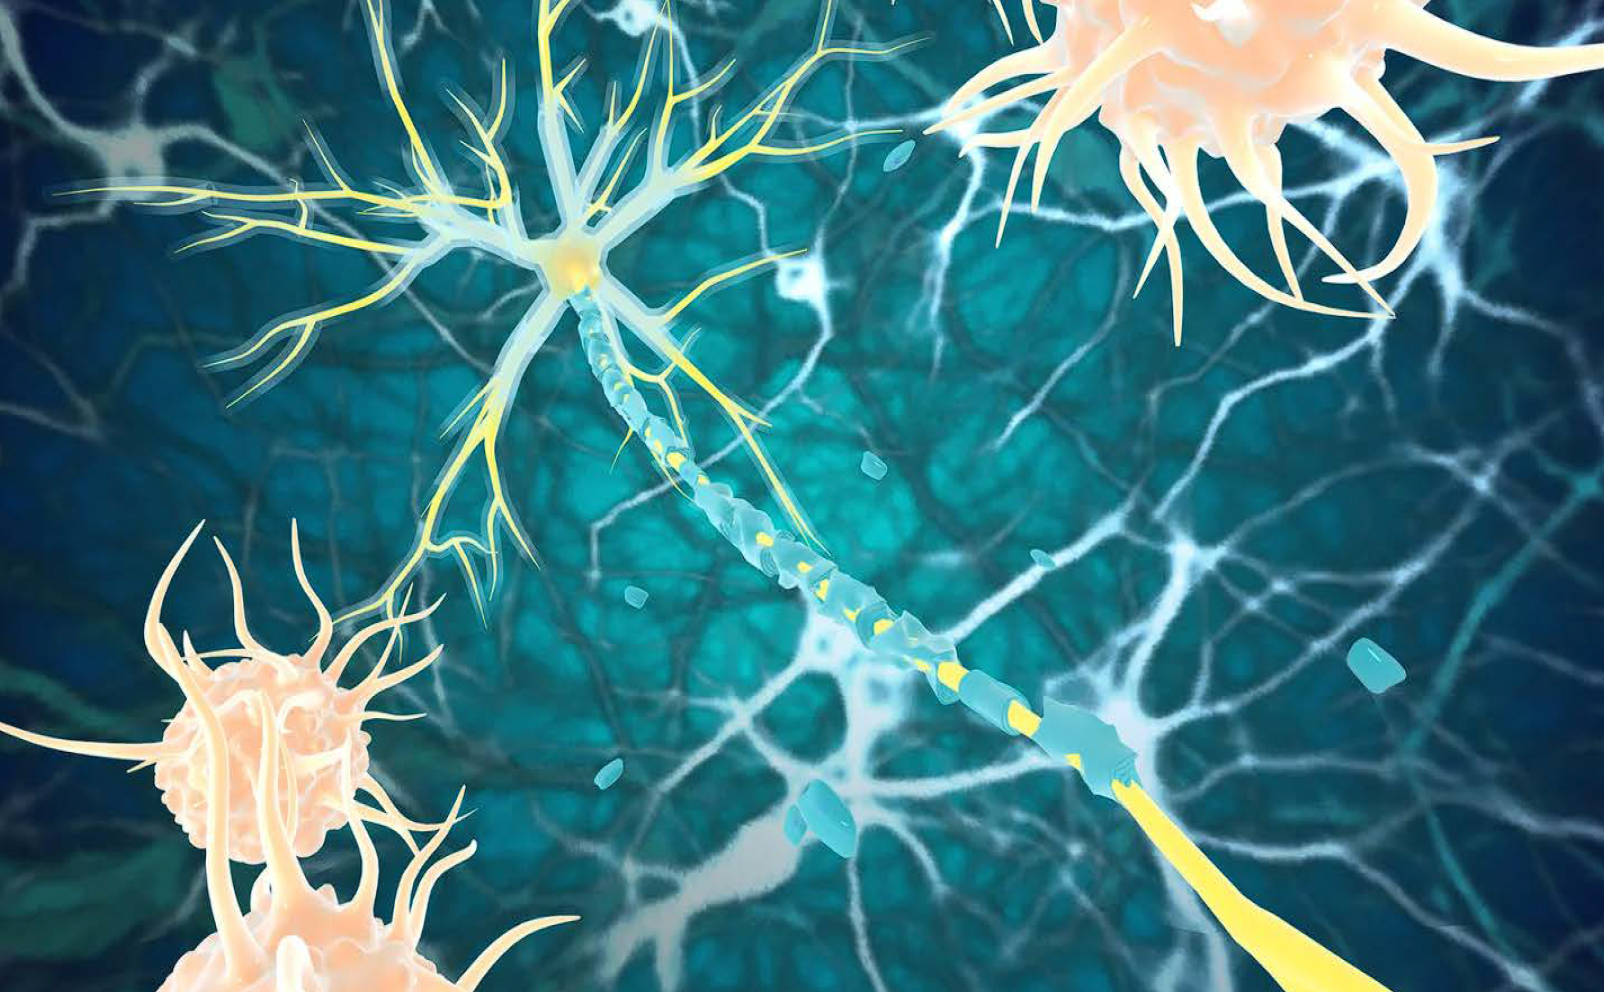 An illustration of the central nervous system